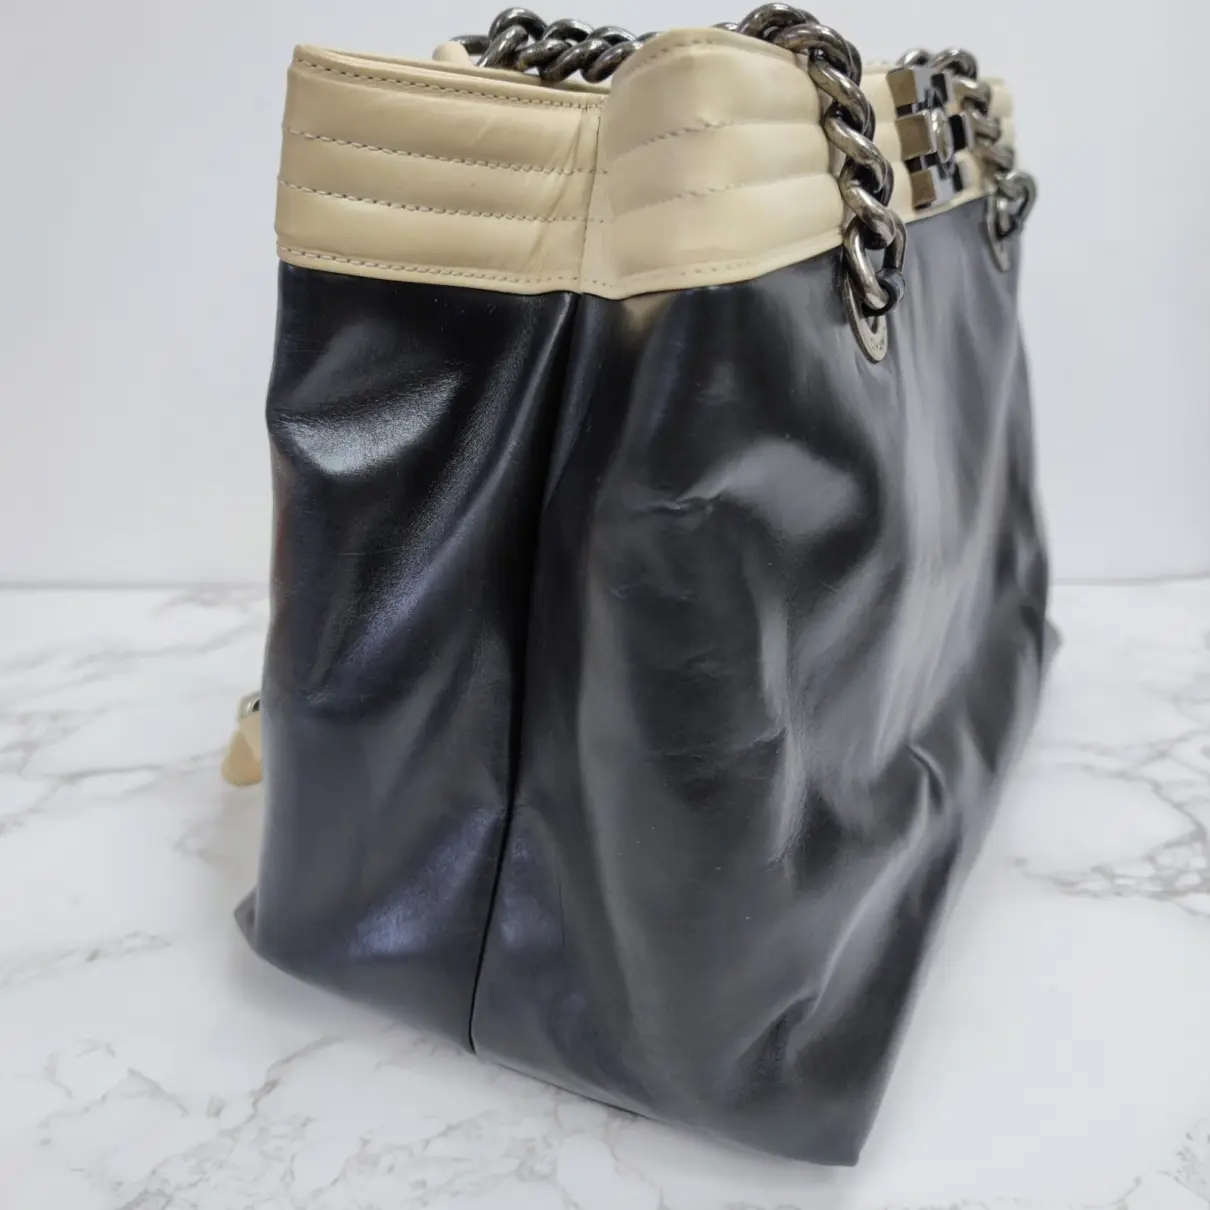 Buy Chanel Boy Tote leather handbag online - Vintage